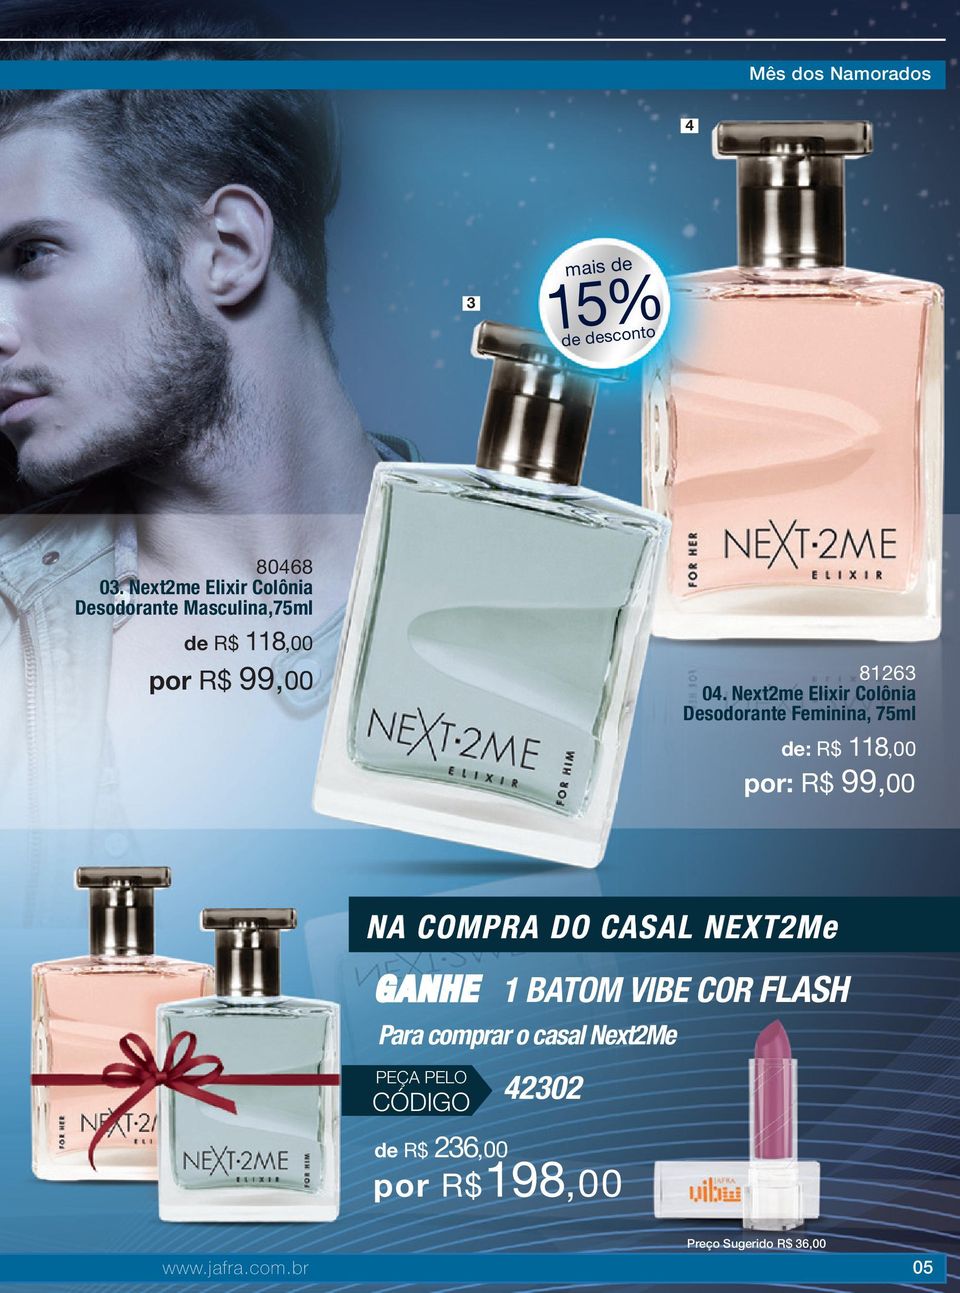 Nextme Elixir Colônia Desodorante Feminina, 75ml de: R$ 8,00 por: R$ 99,00 NA COMPRA DO